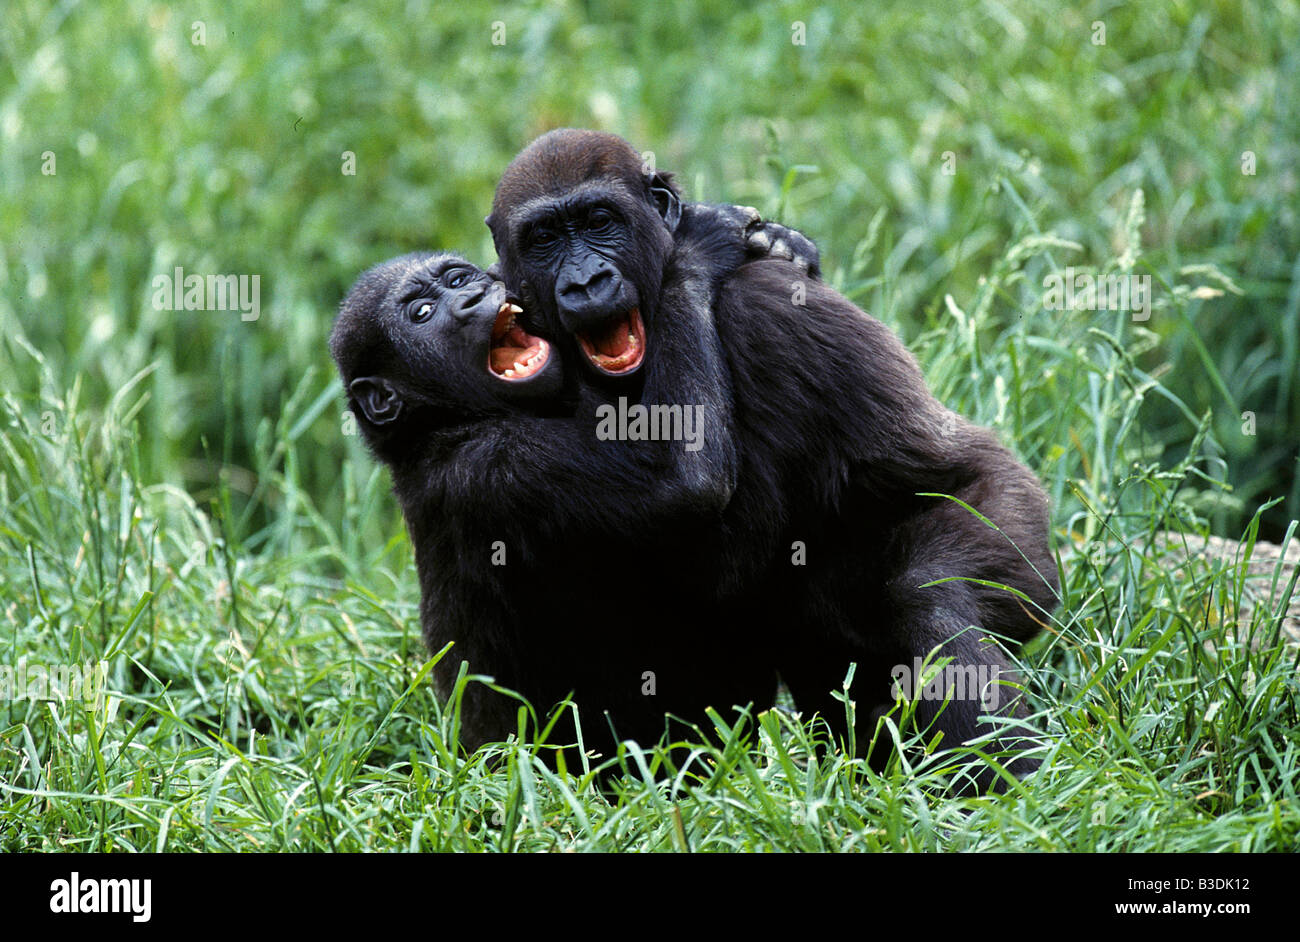 Gorilla Gorilla Fighting Stock Photos & Gorilla Gorilla Fighting Stock Images - Alamy